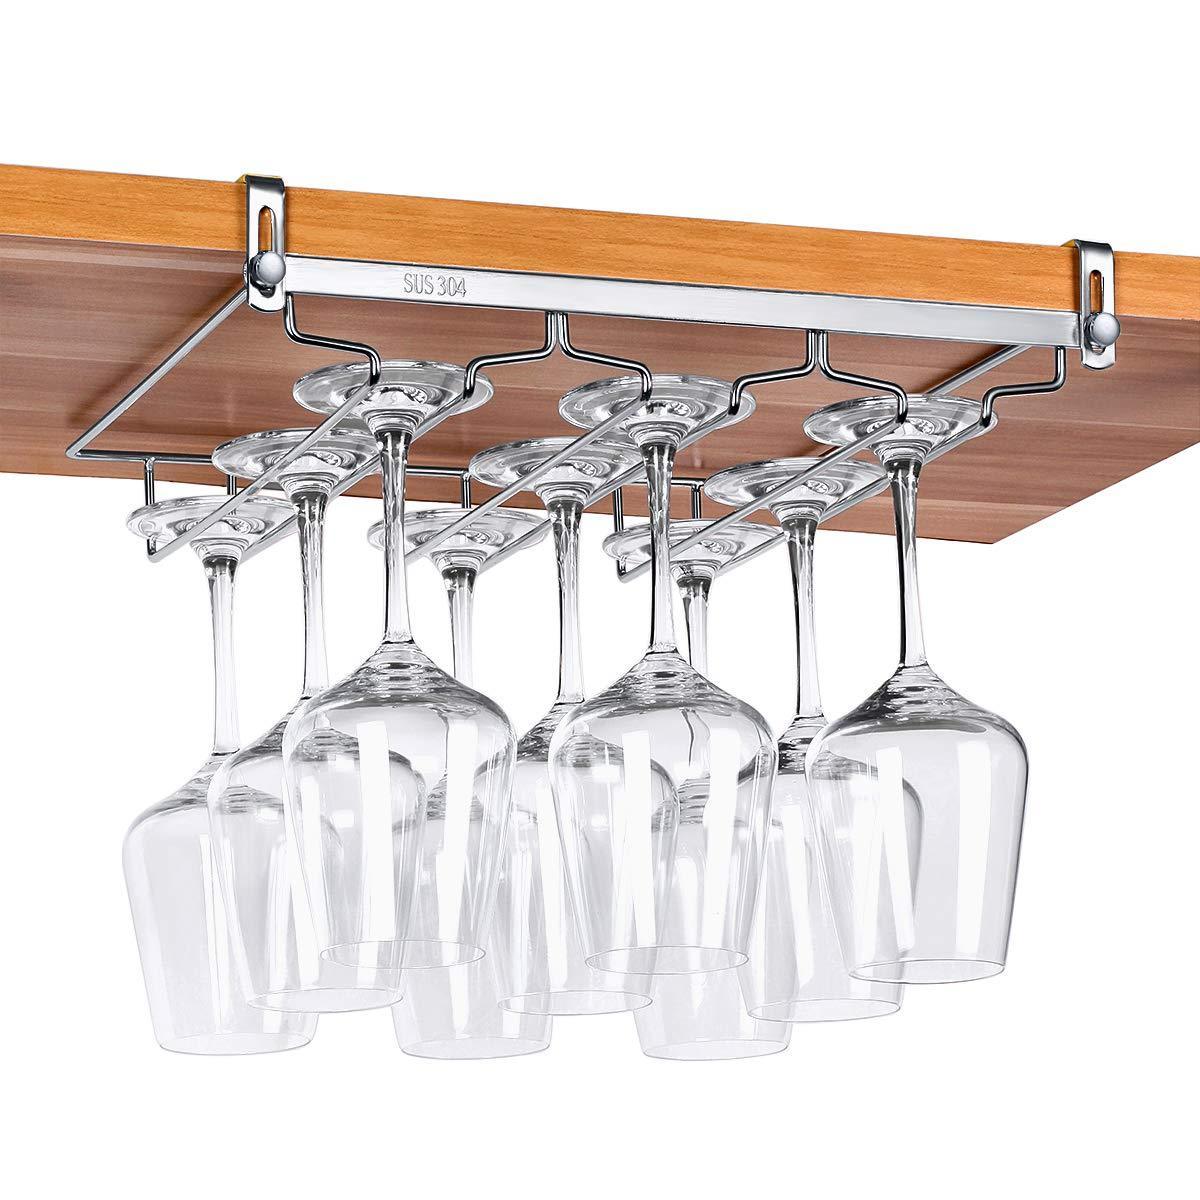 Save vobaga stemware racks 3 rows adjustable stainless steel wine glass rack stemware hanger bar home cup glass holder dinnerware kitchen dining hold 9 glasses